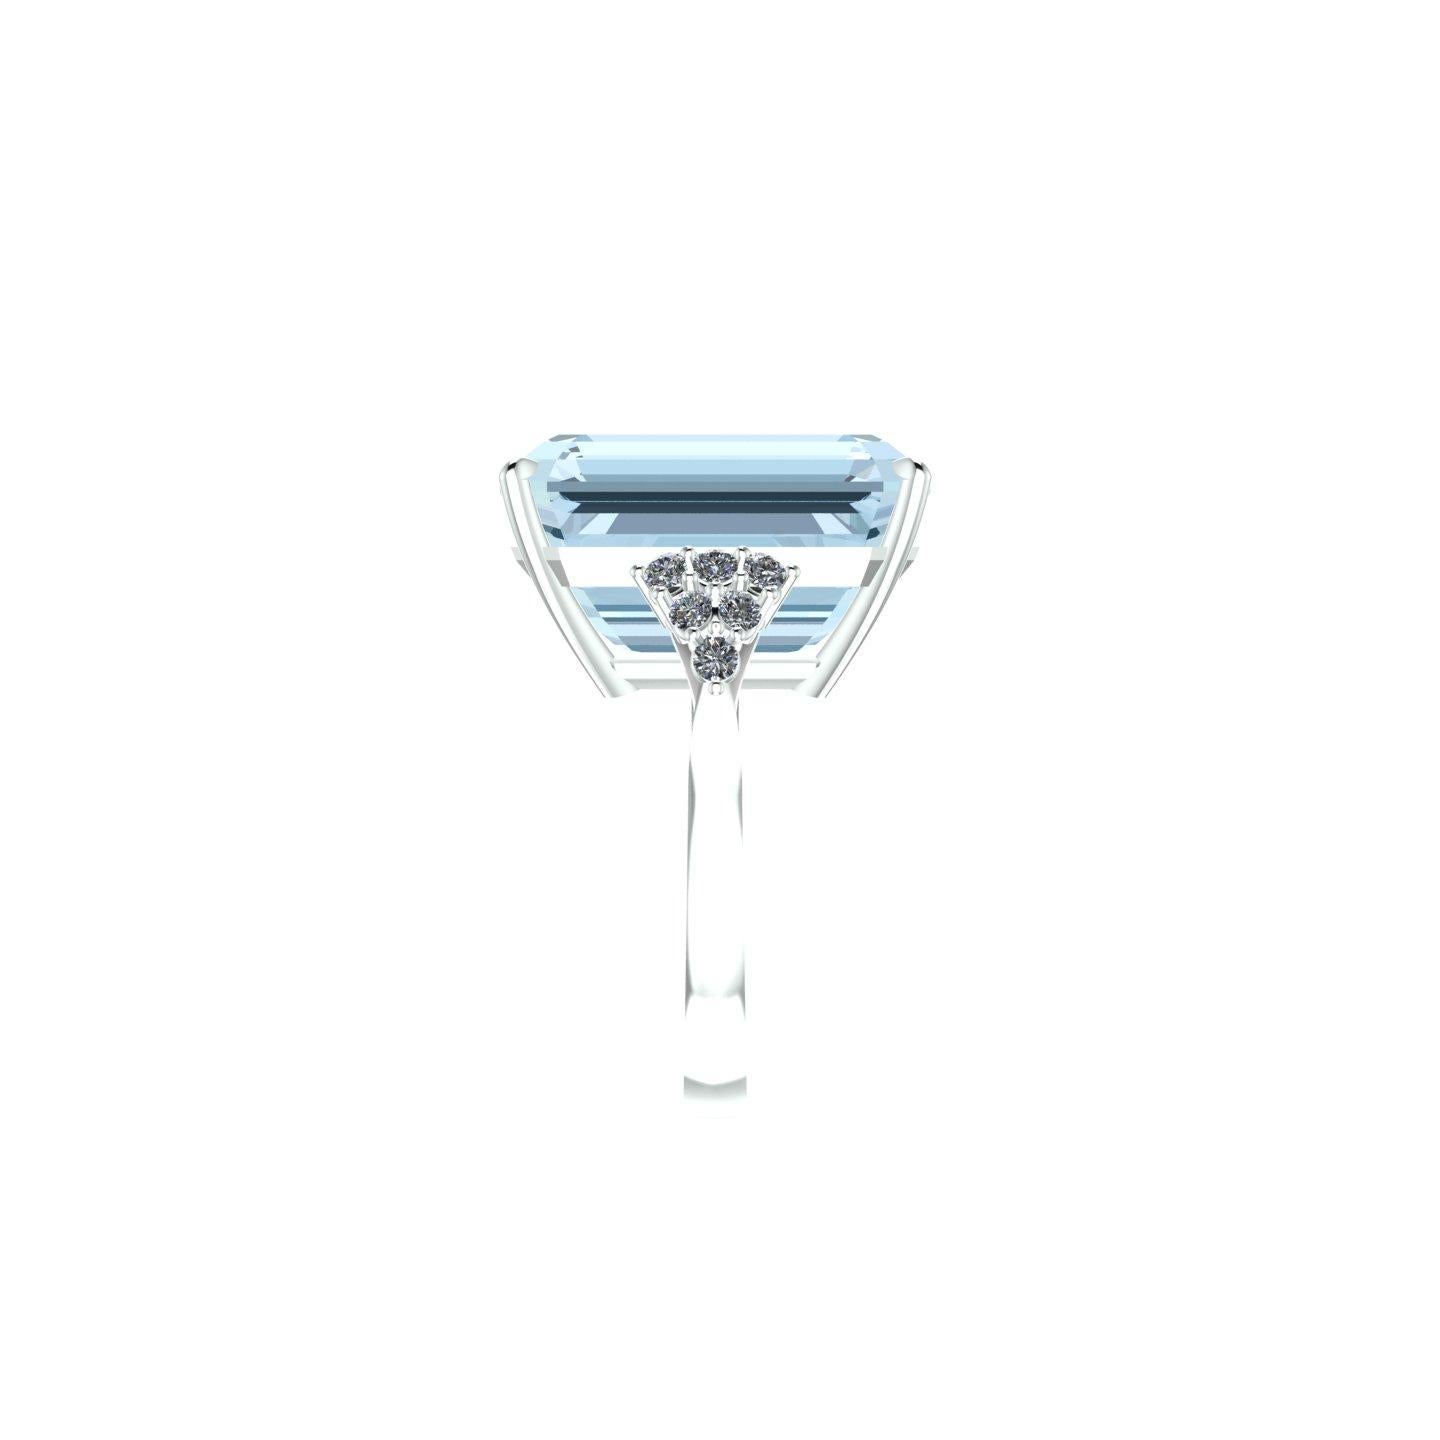 Art Deco 24.02 carats Aquamarine Setting in Platinum 950, side diamonds 0.36 carats